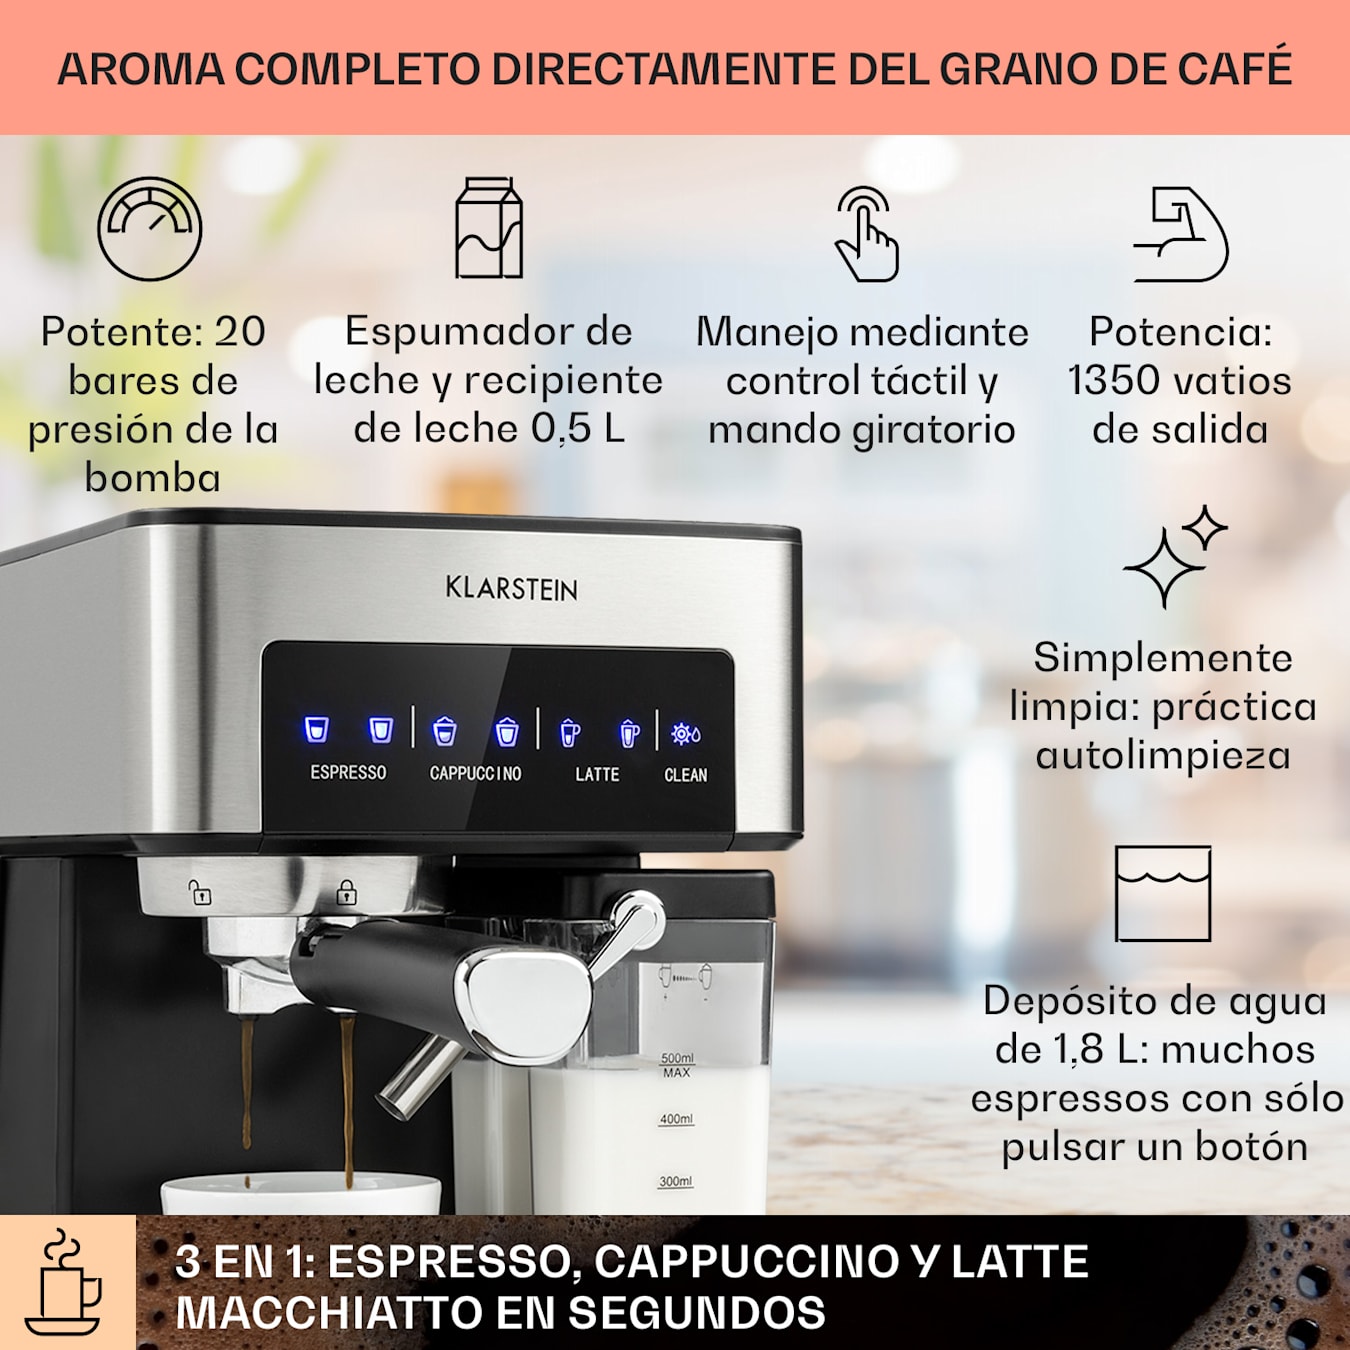 Cafetera Delonghi Oferta + 2 kg de café molido - Tienda Espressa